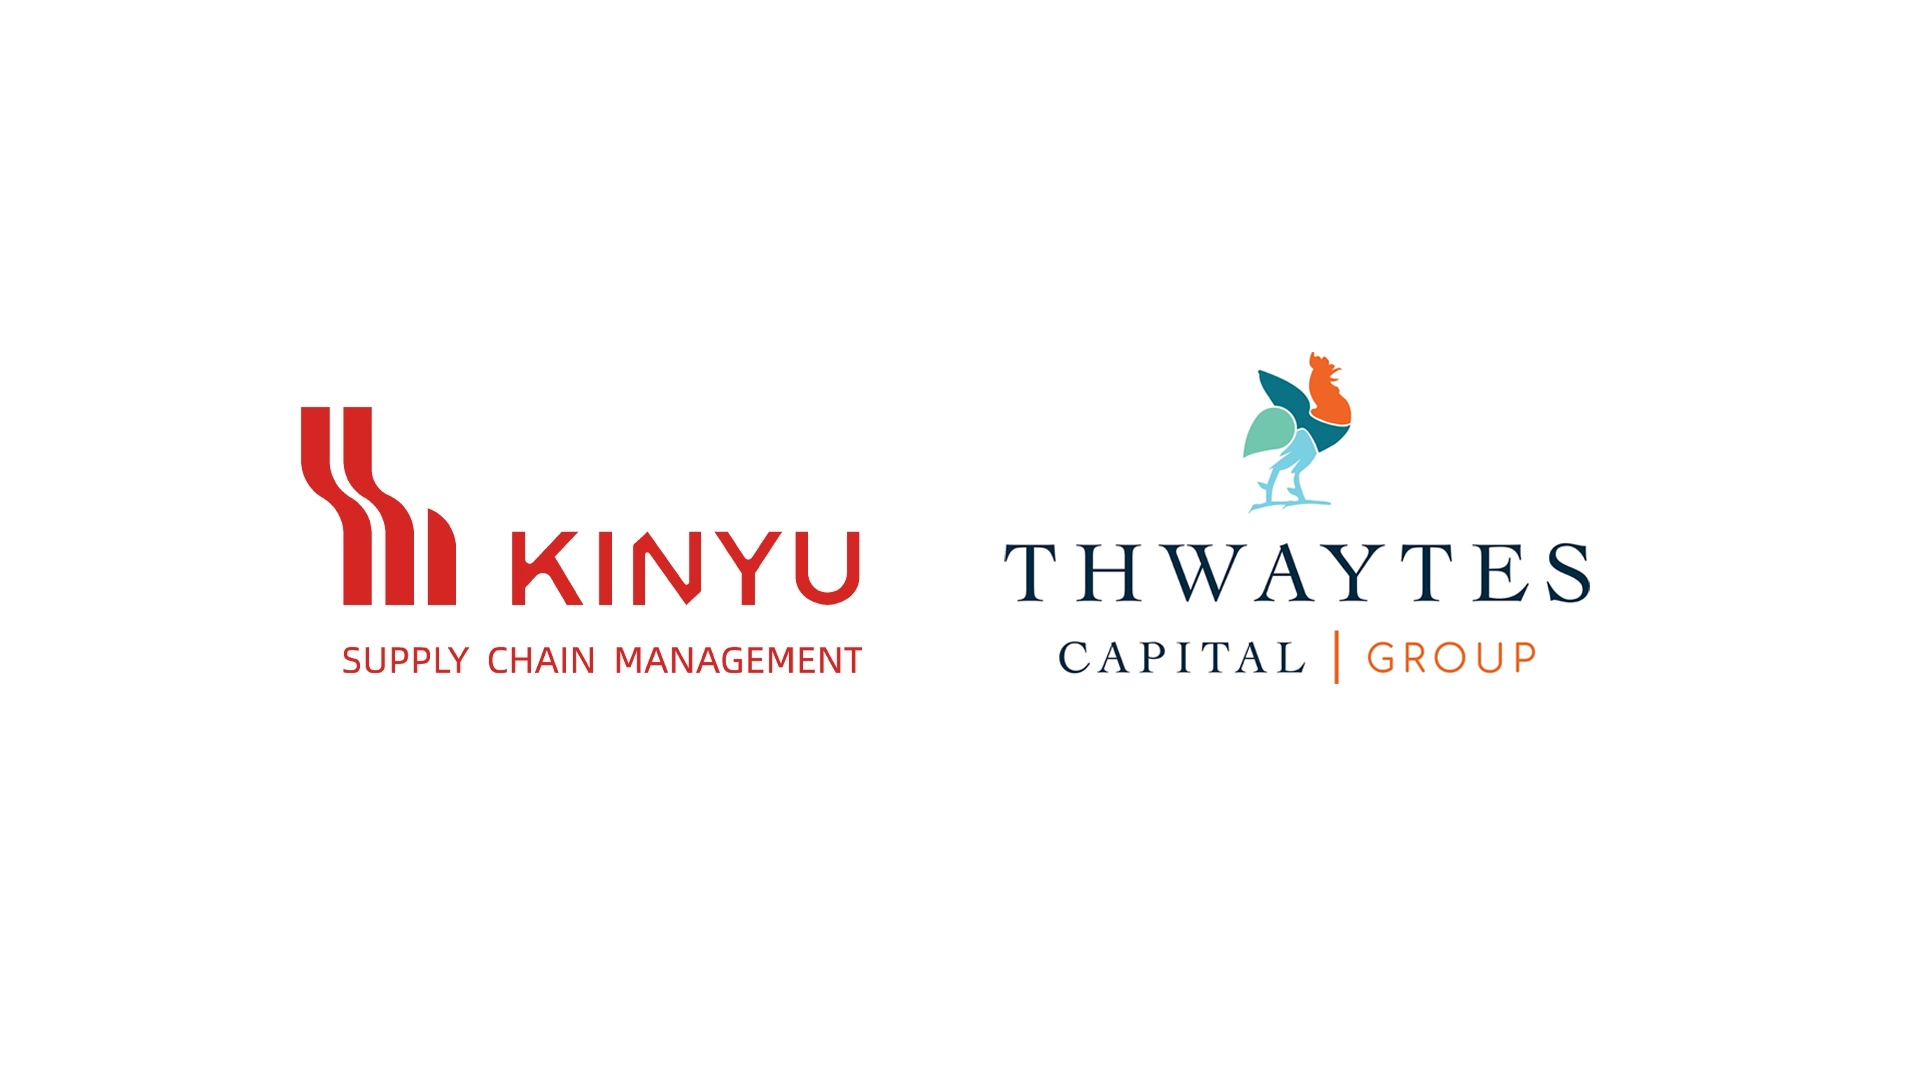 The logos of Kinyu SCM and Thwaytes Capital. [Image/Kinyu/Thwaytes Capital]